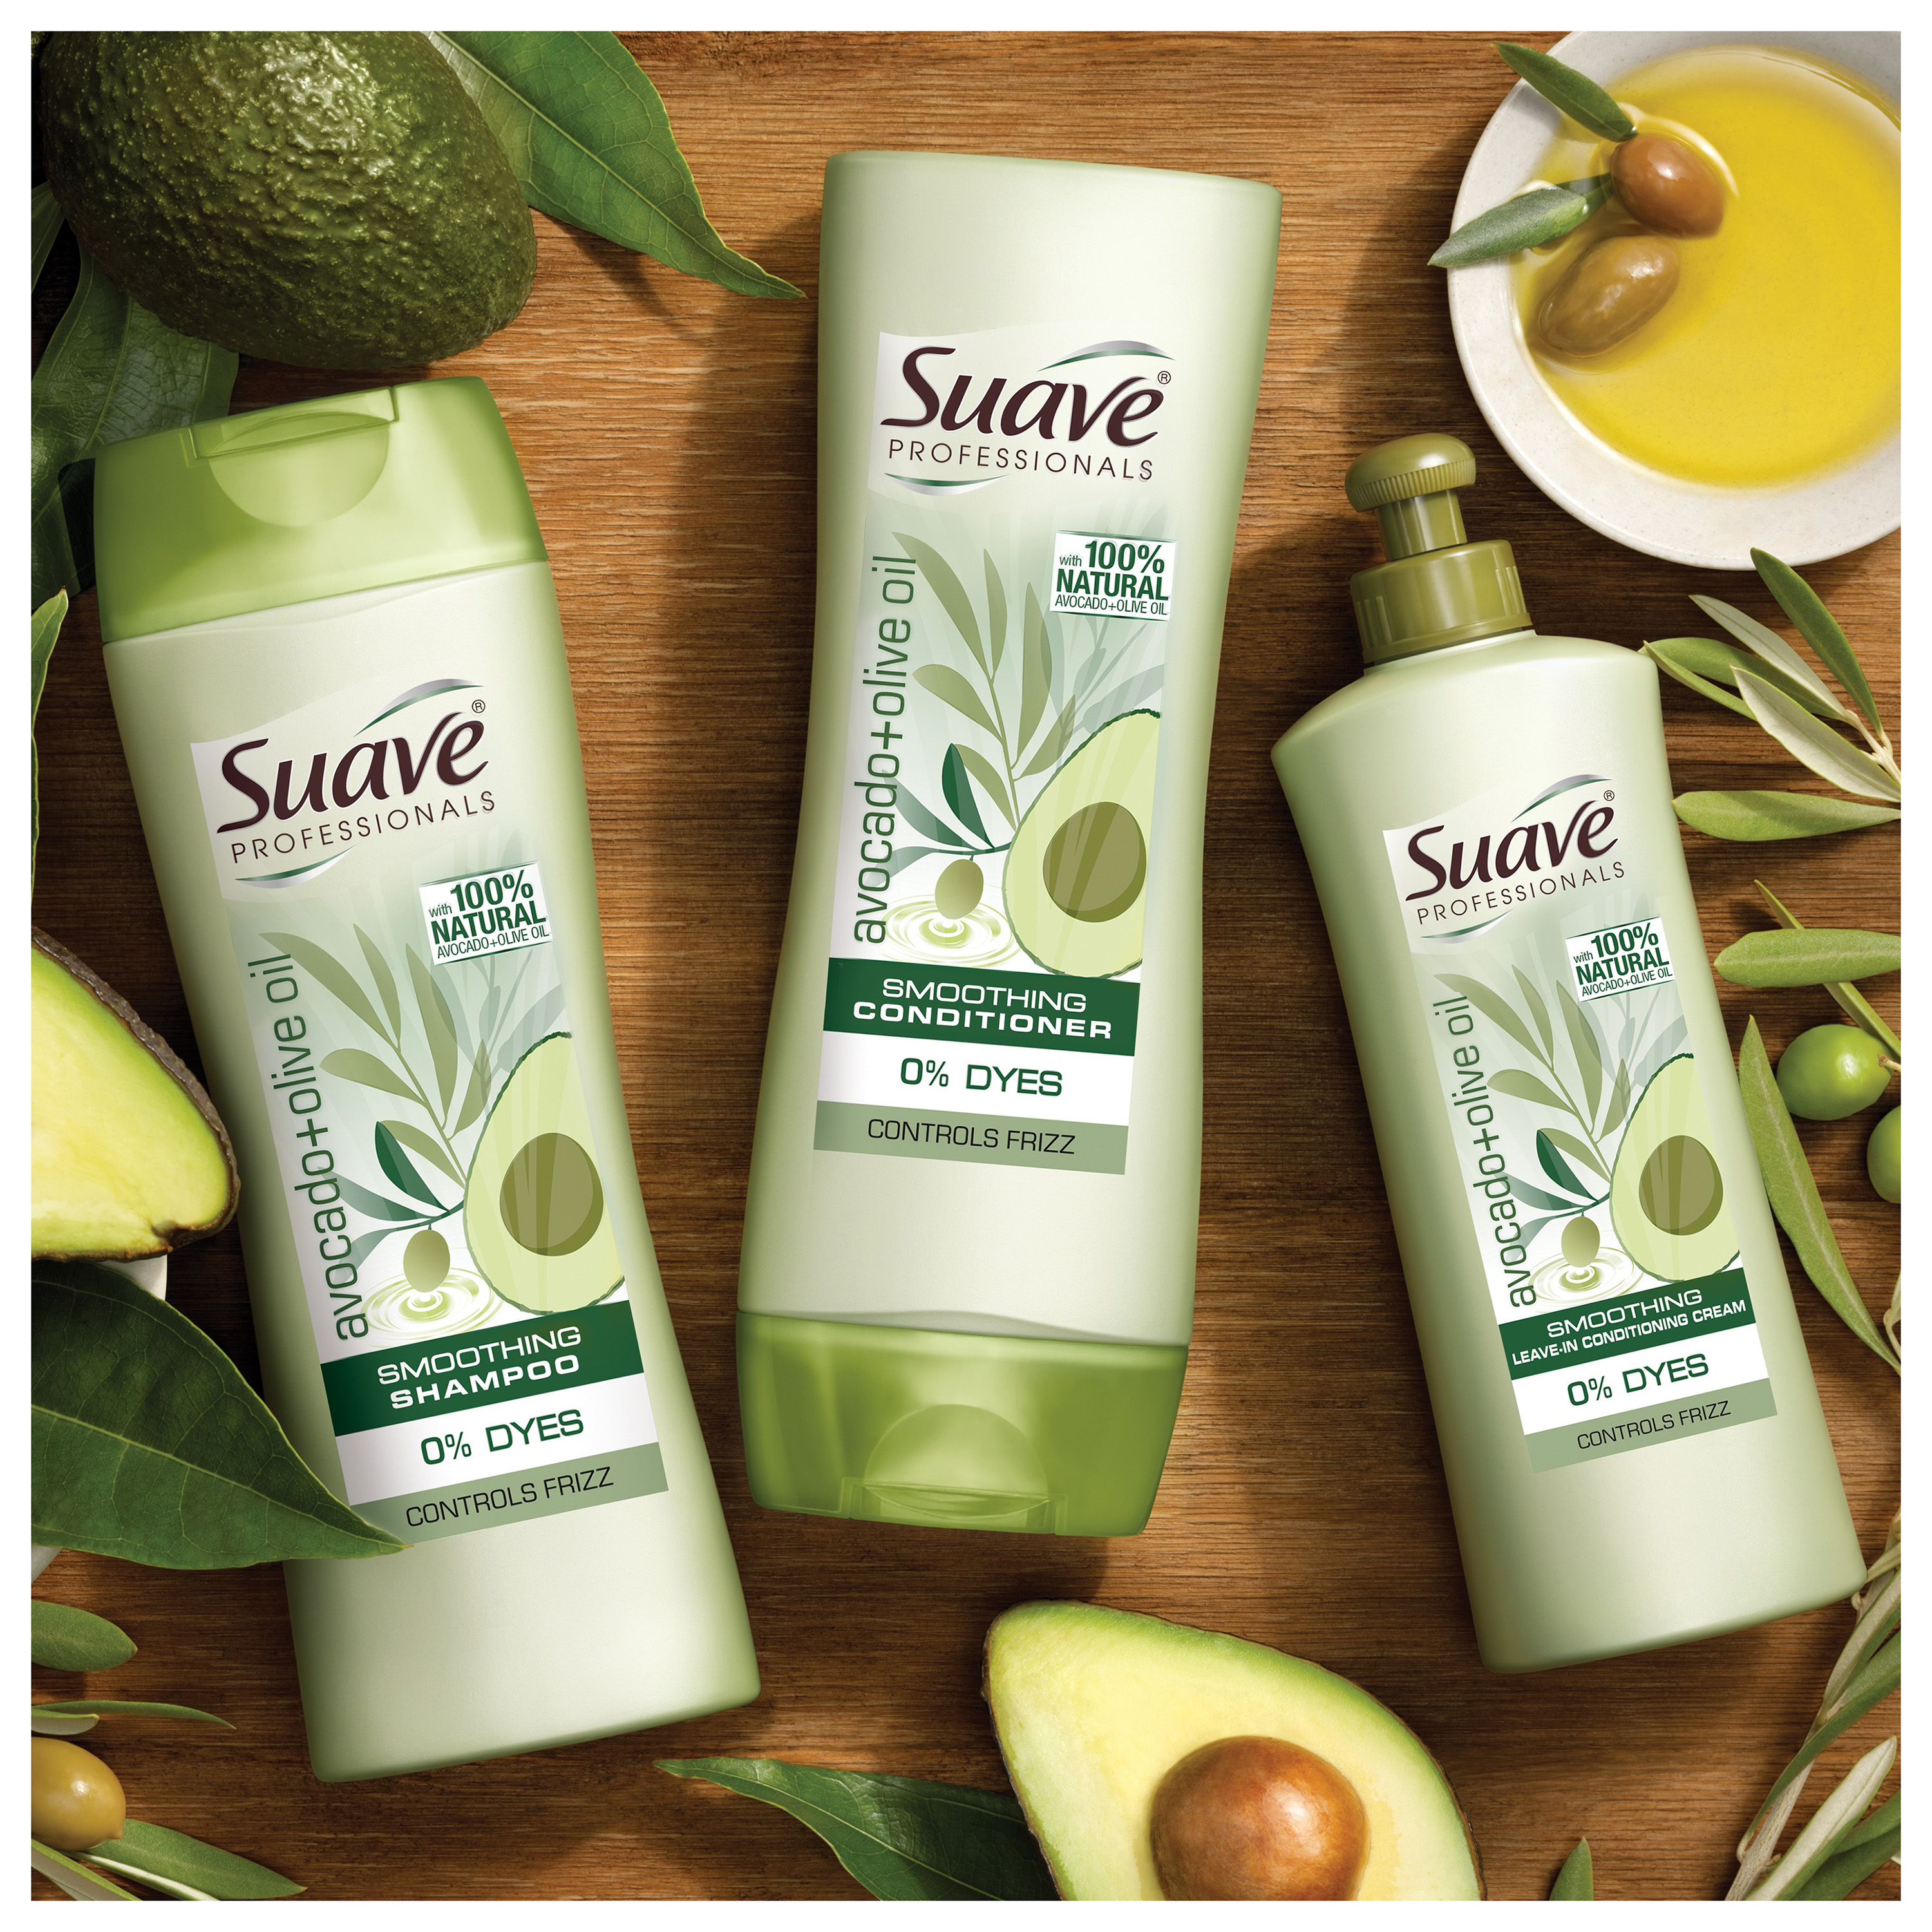 Suave Professionals Avocado + Olive Oil Leave-in Conditioner, 10.2 oz - image 3 of 10